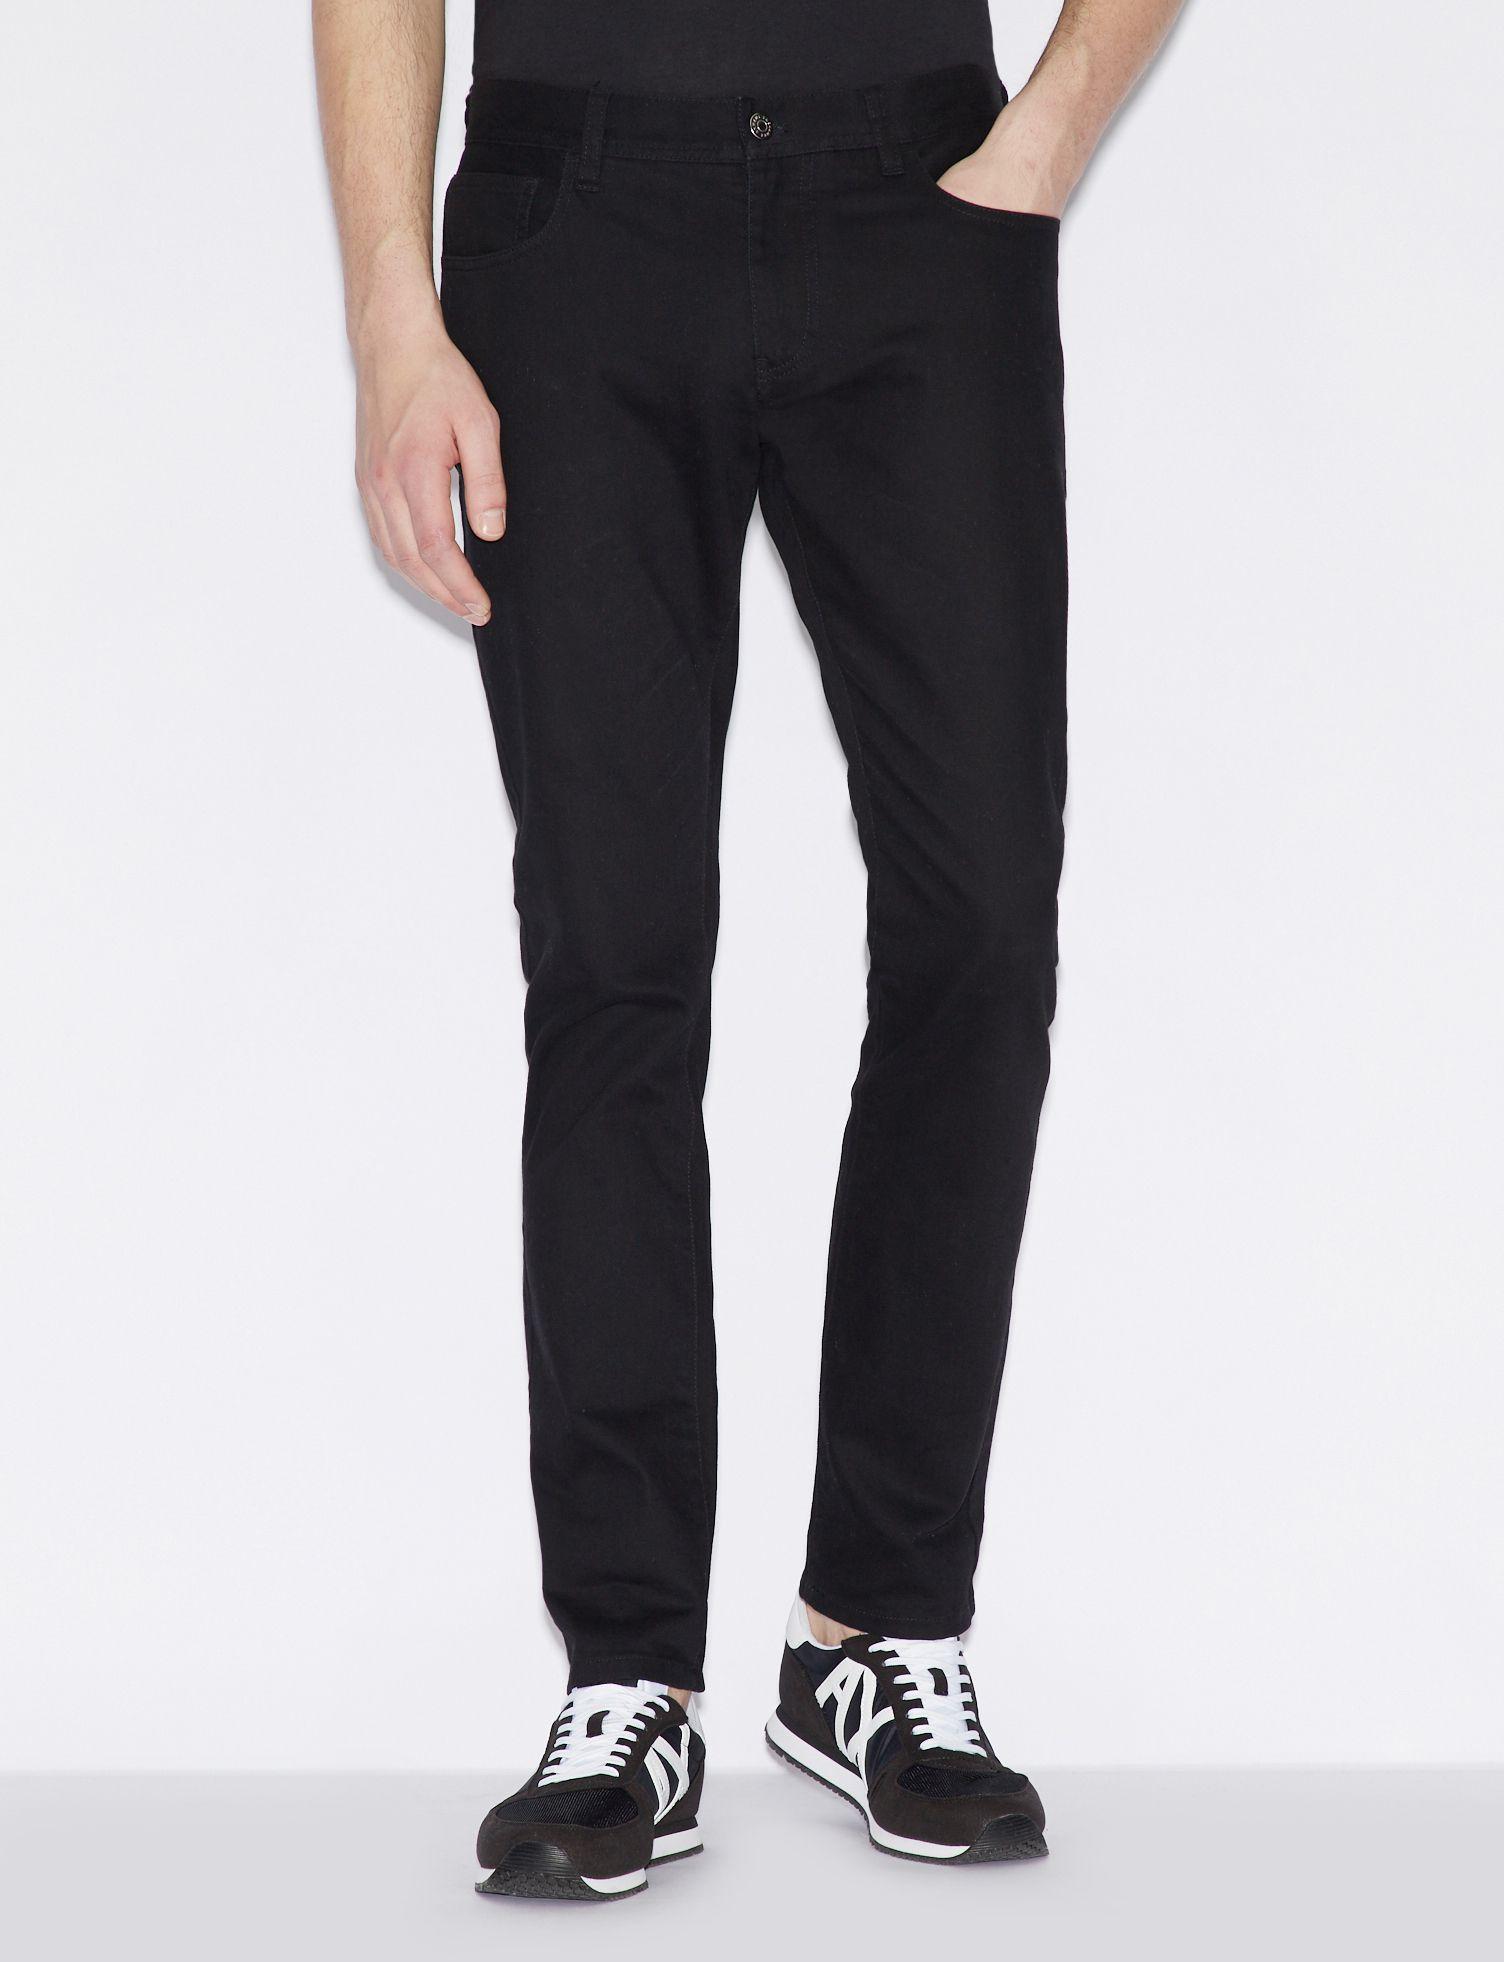 Armani Exchange Denim J13 Slim-fit Jeans in Black for Men - Lyst